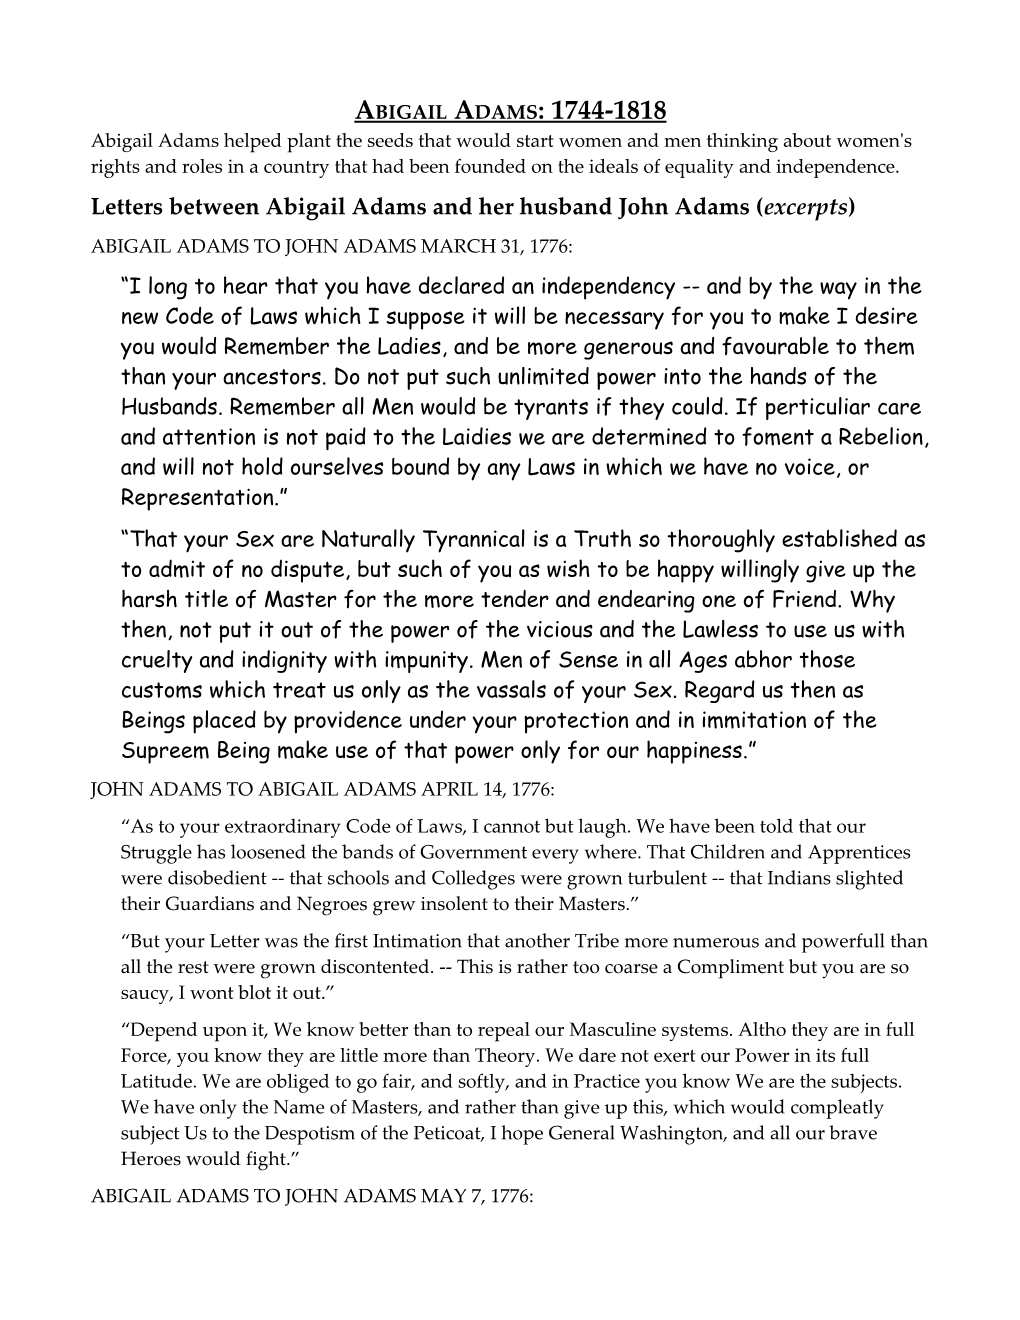 Letters Between Abigail Adams and Her Husband John Adams (Excerpts)